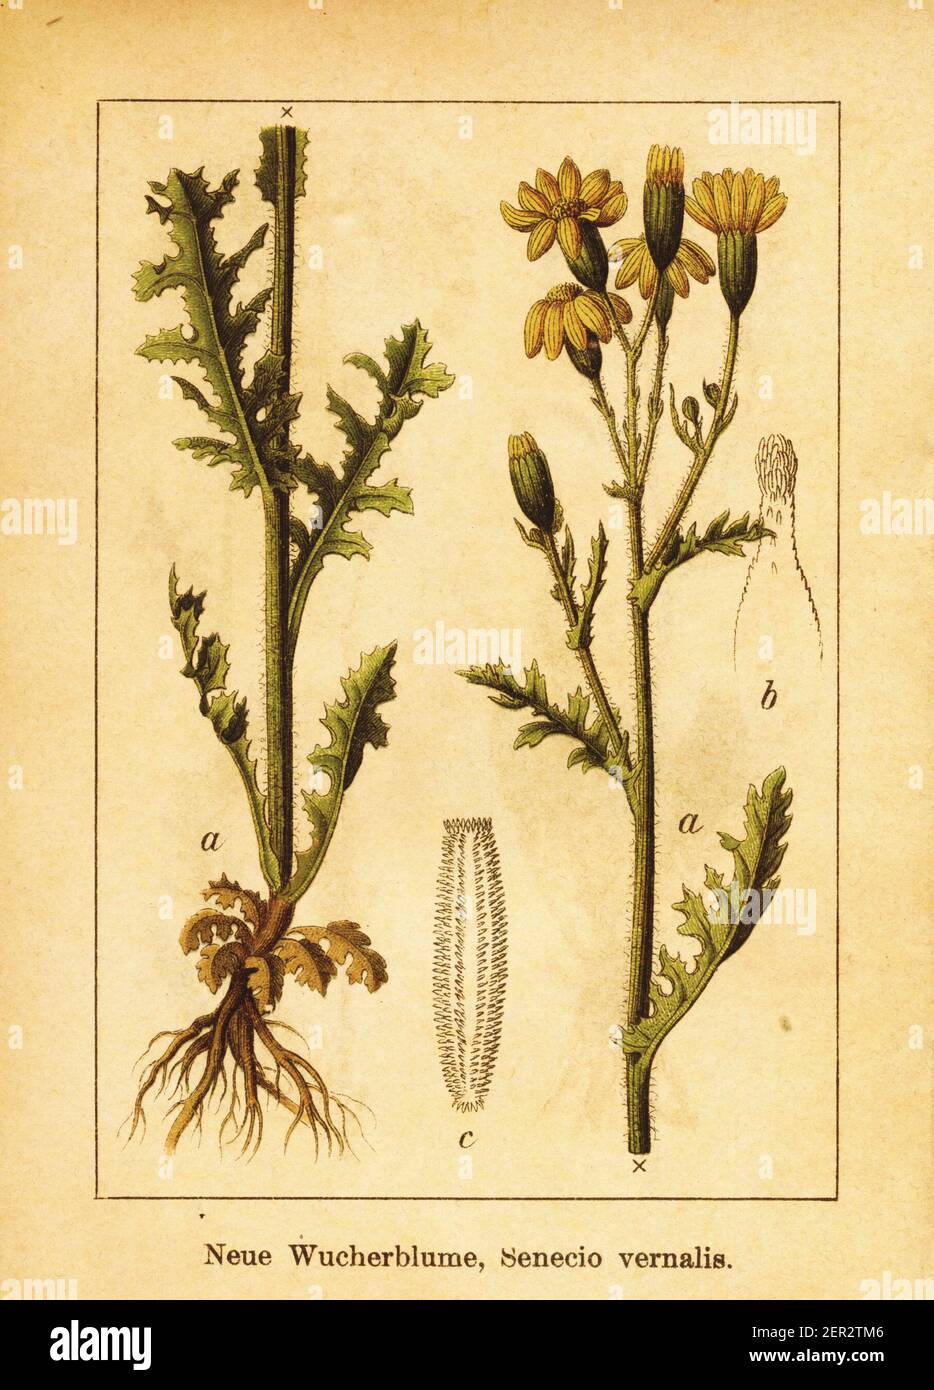 Antique 19th-century engraving of Eastern groundsel. Illustration by Jacob Sturm (1771-1848) from the book Deutschlands Flora in Abbildungen nach der Stock Photo